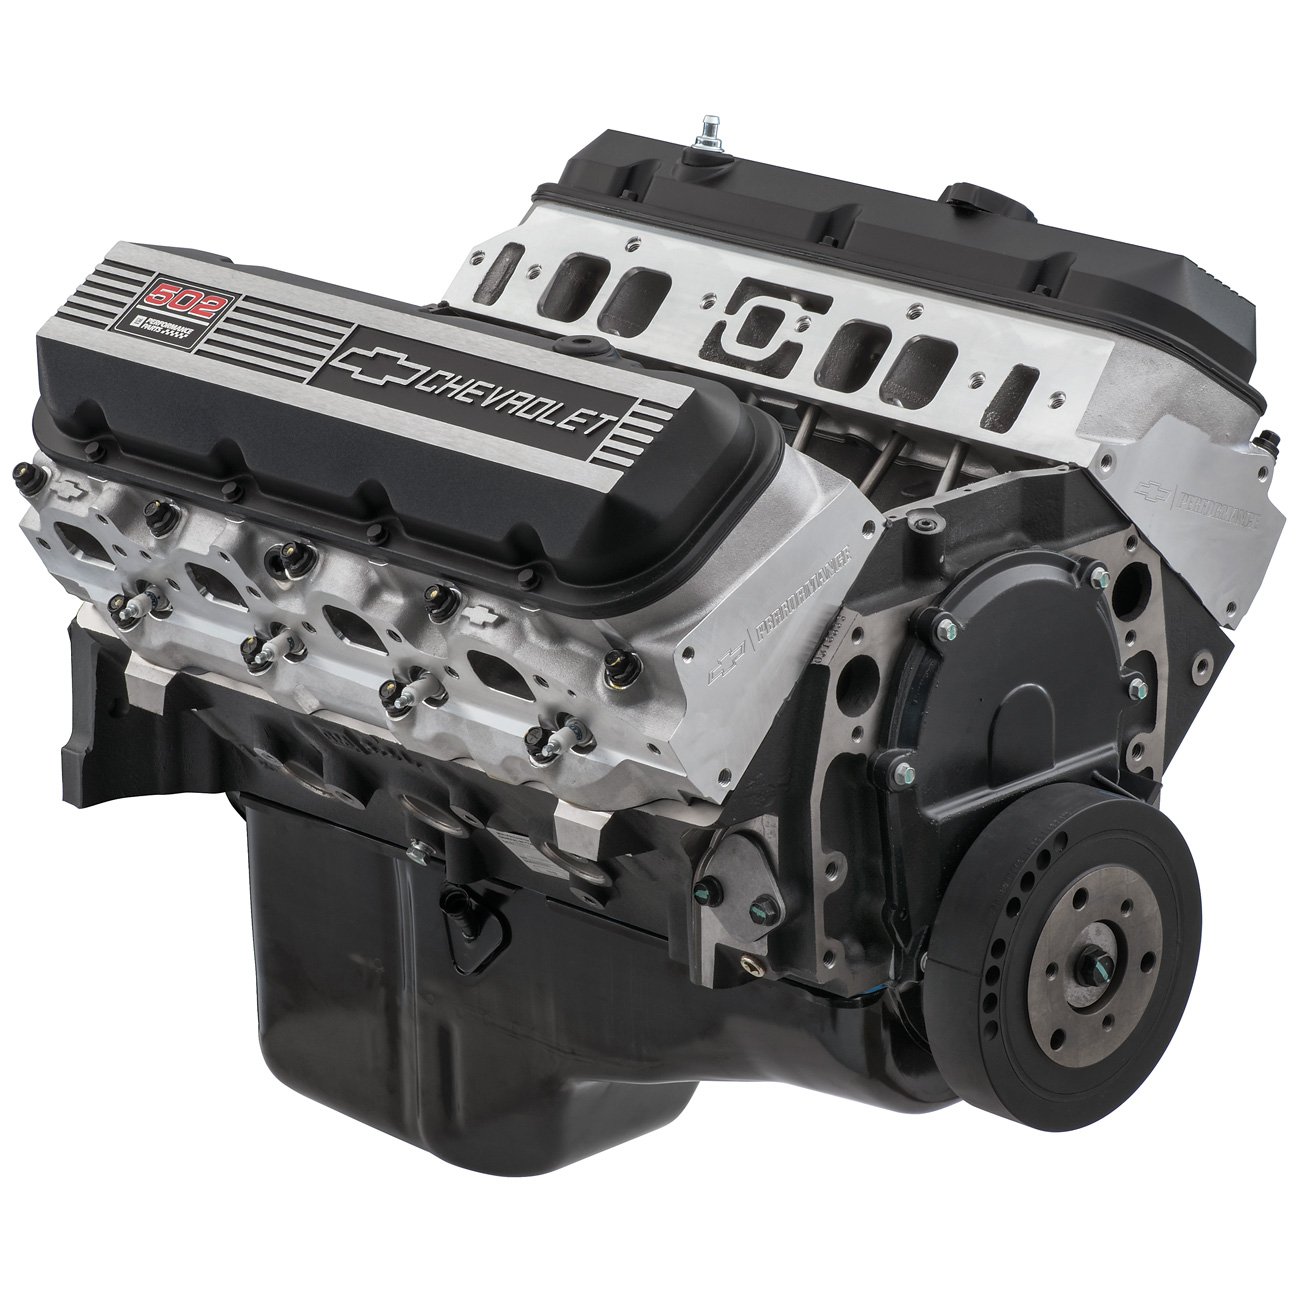 ZZ502 Base Engine, 508 HP @ 5,200 RPM